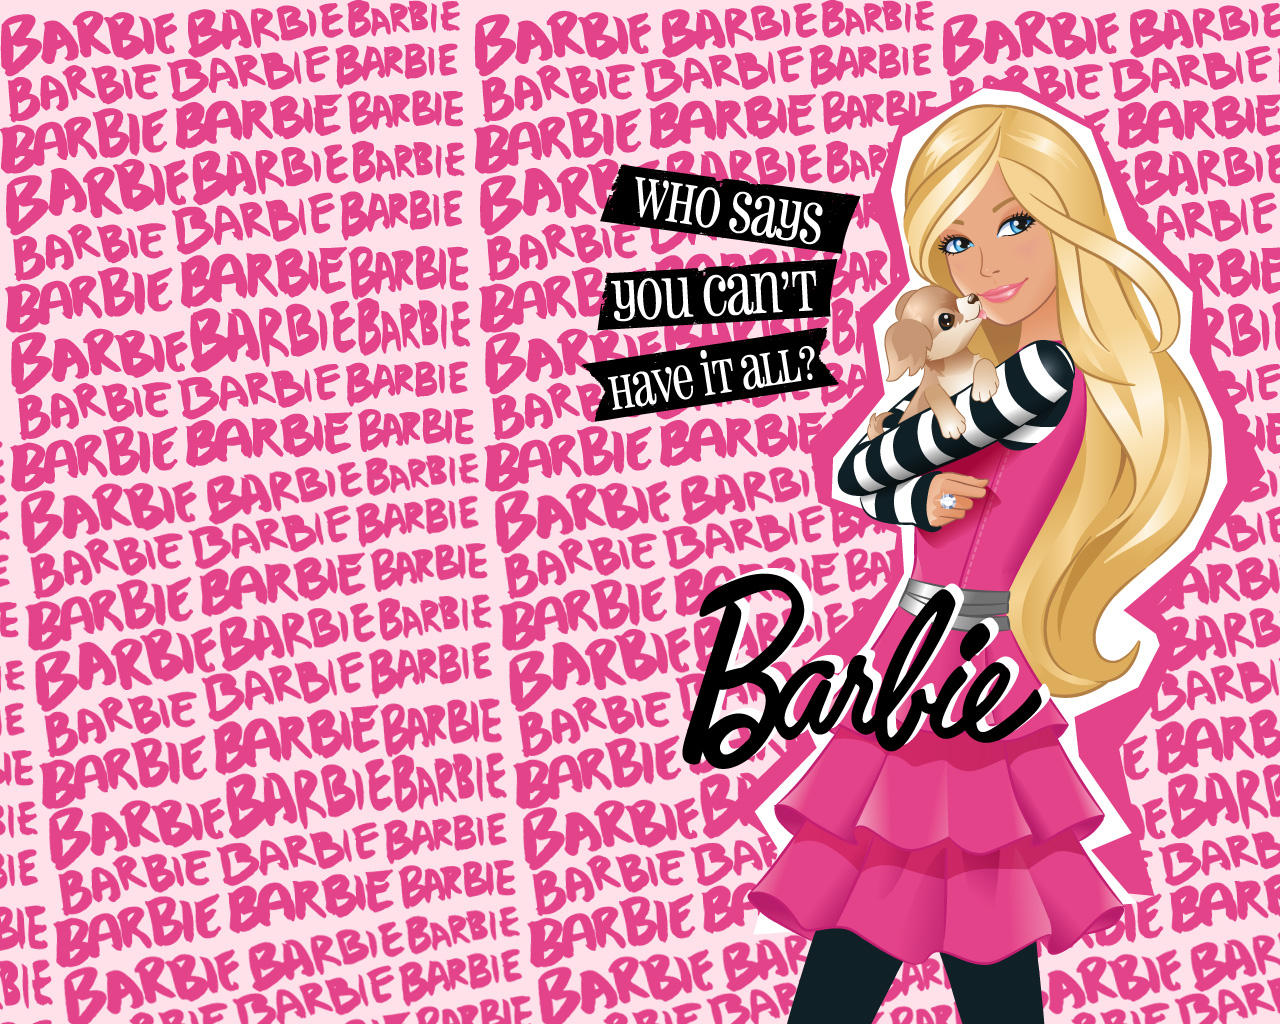 Barbie Wallpaper